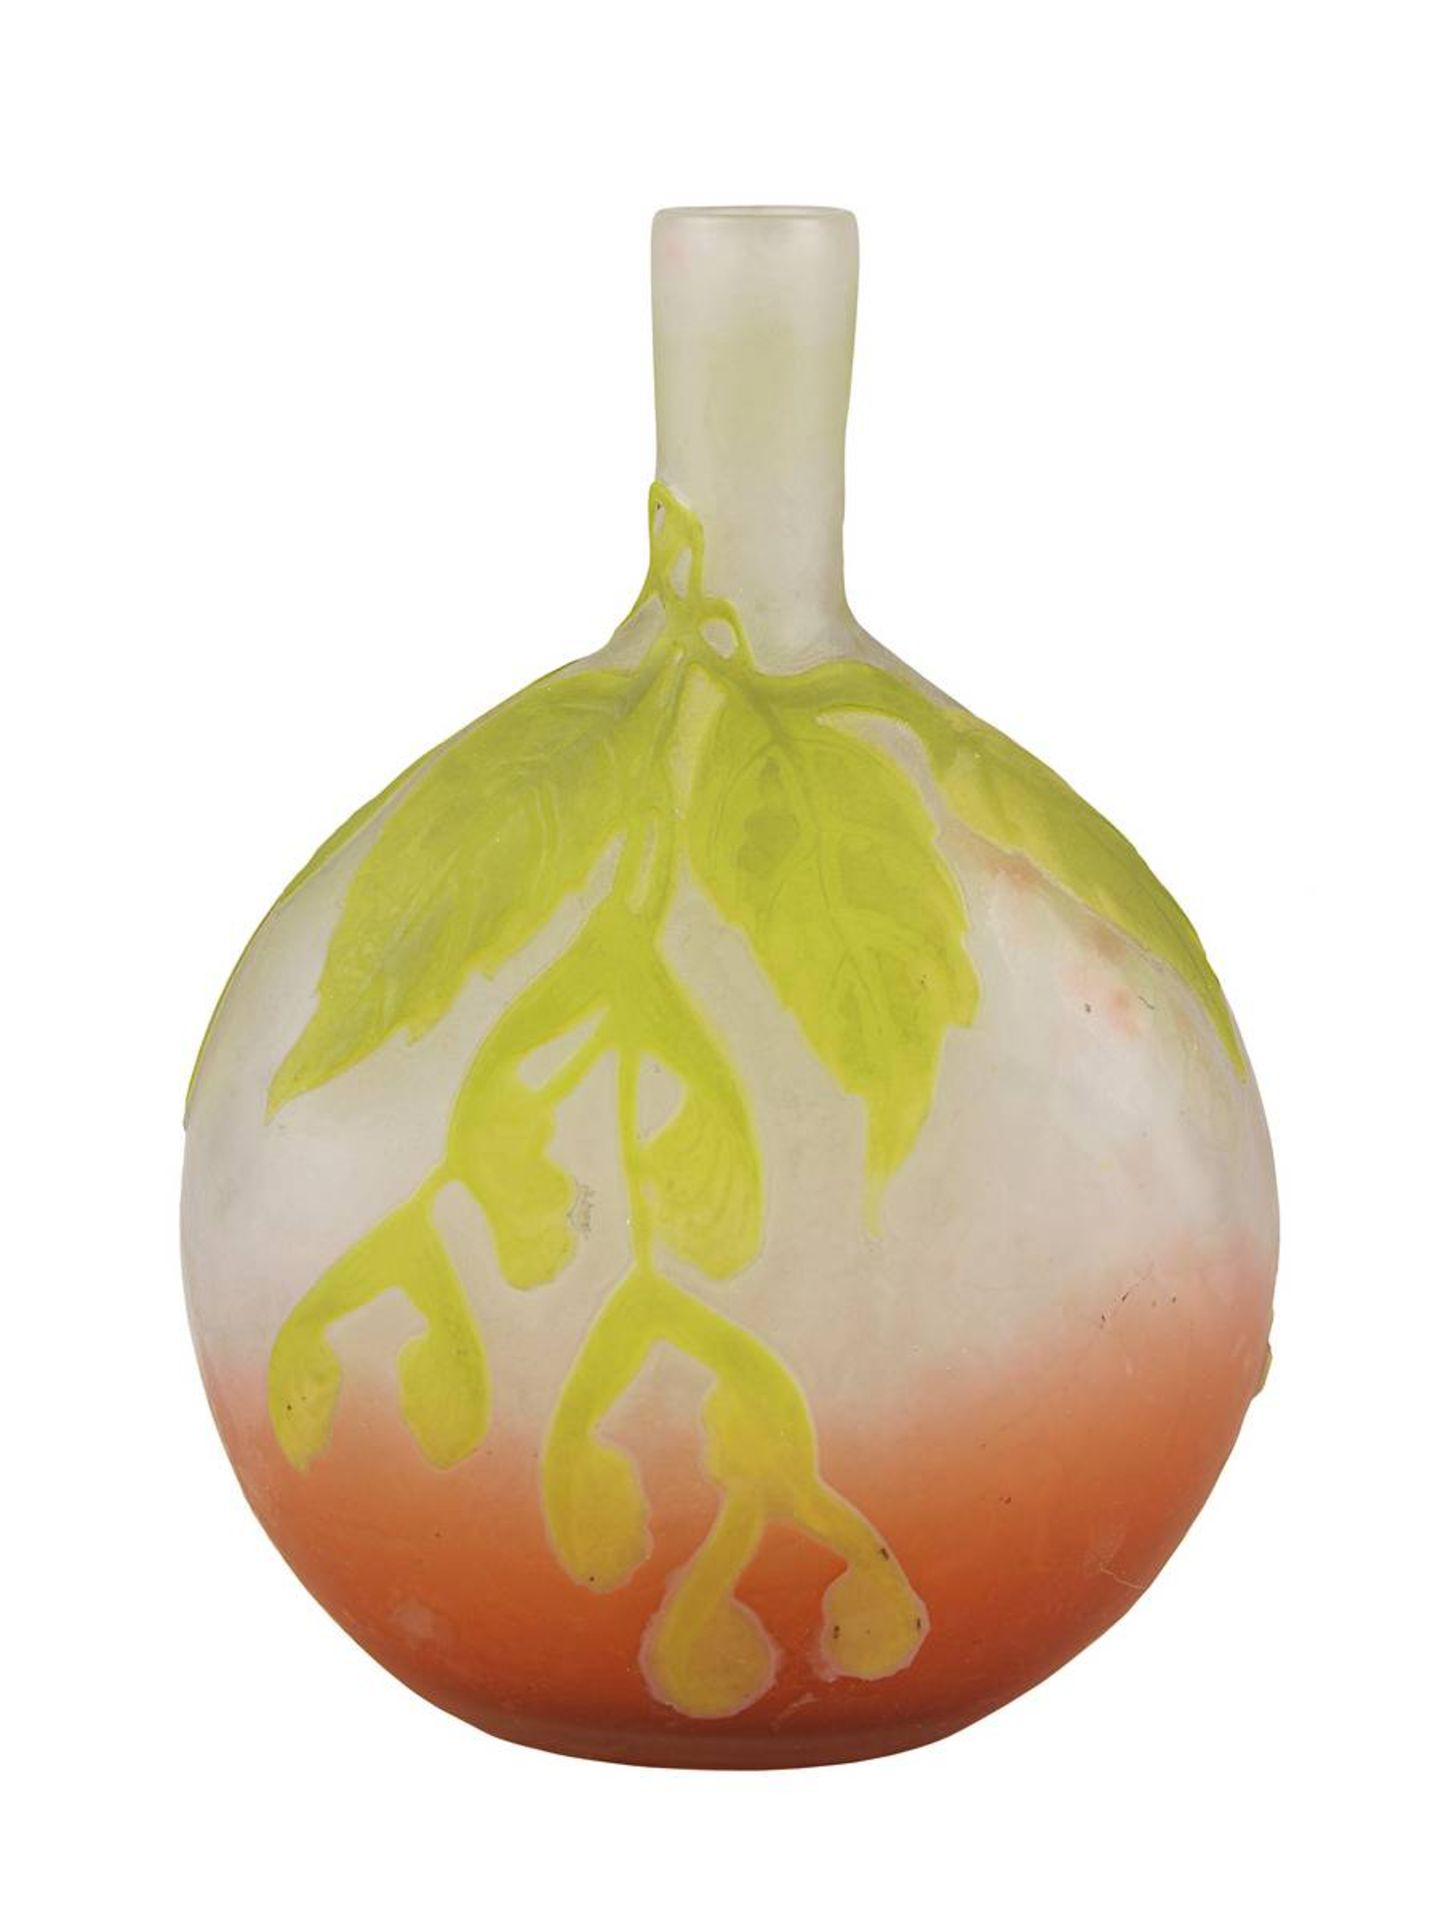 Klein Gallé Jugendstil-Vase mit Ahornmotiv, Nancy 1906-14, Klarglaskorpus innen mit orangefarbenem